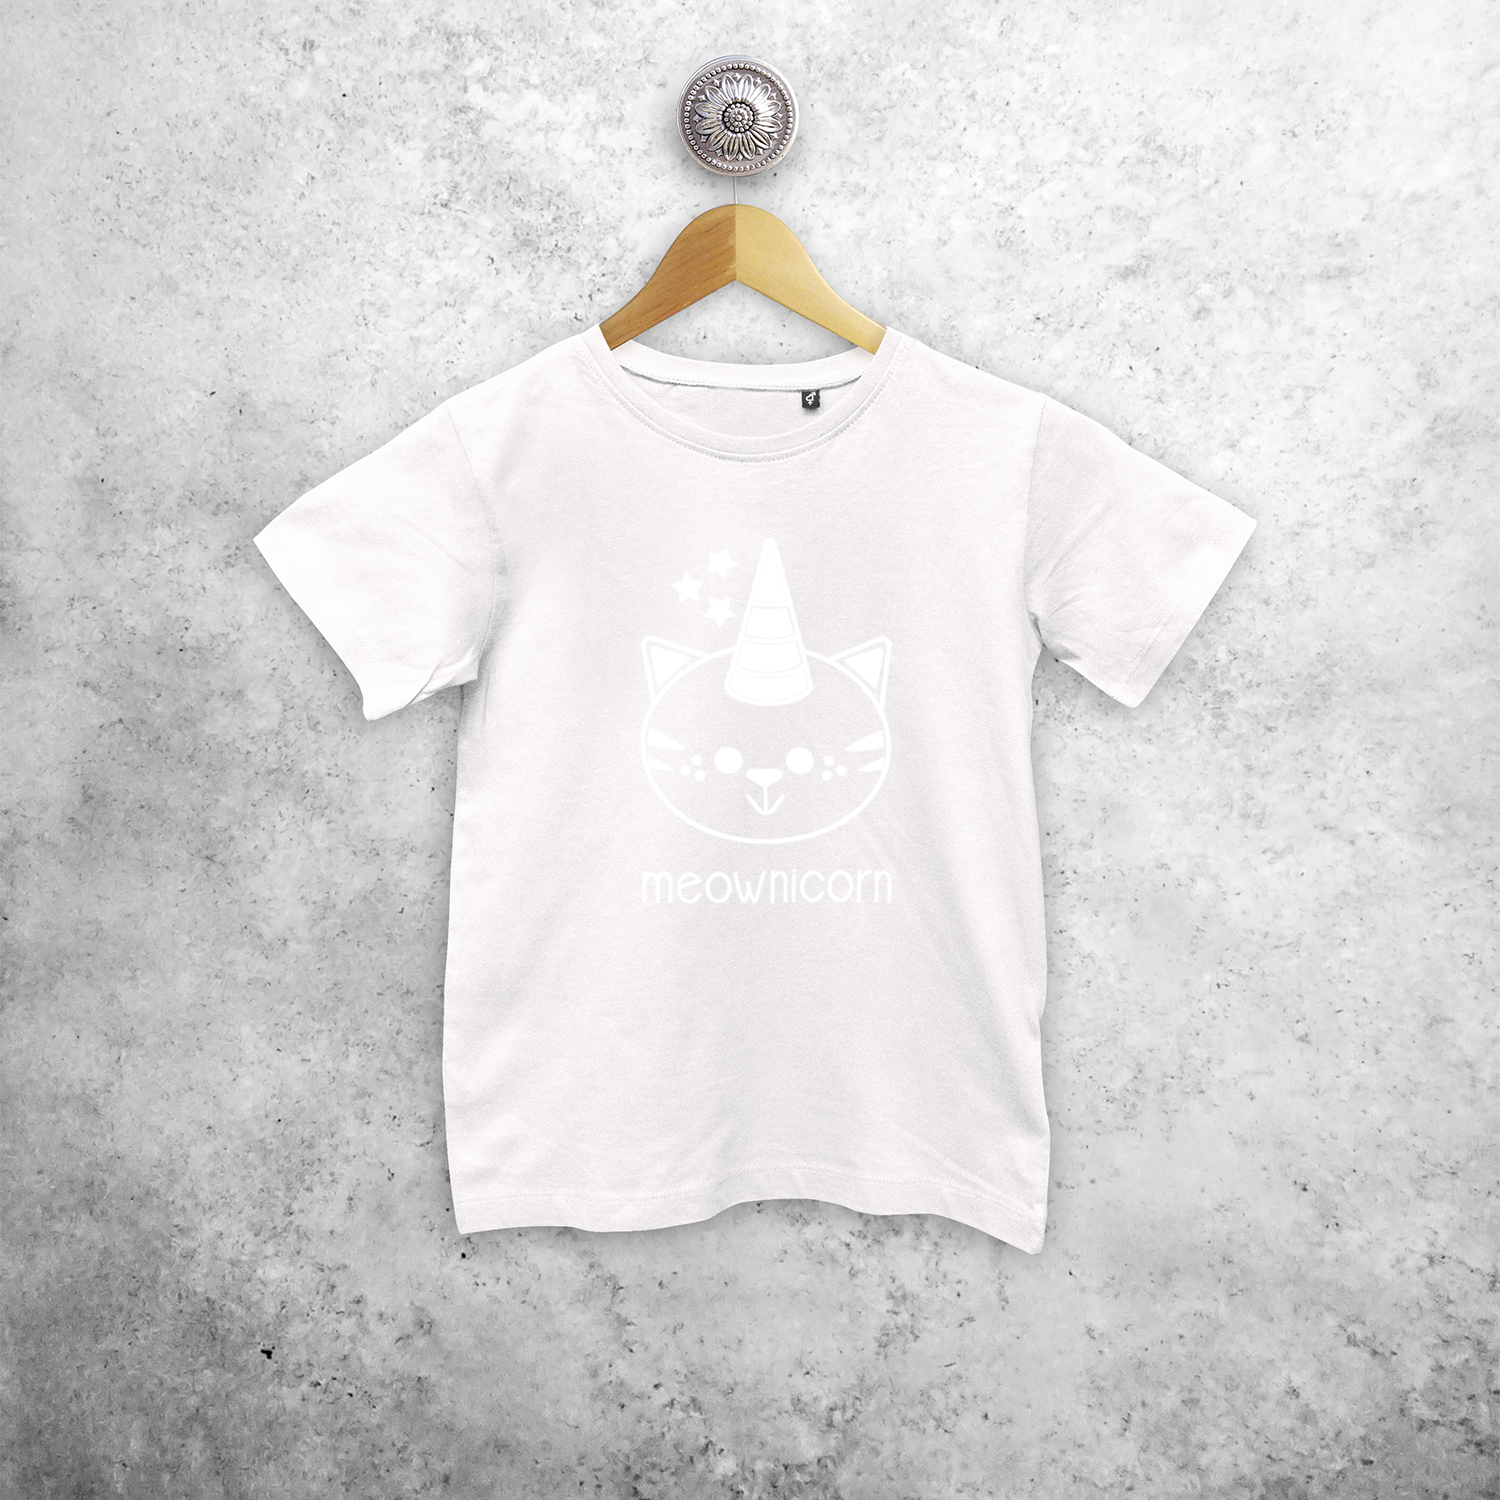 'Meownicorn' magic kids shortsleeve shirt